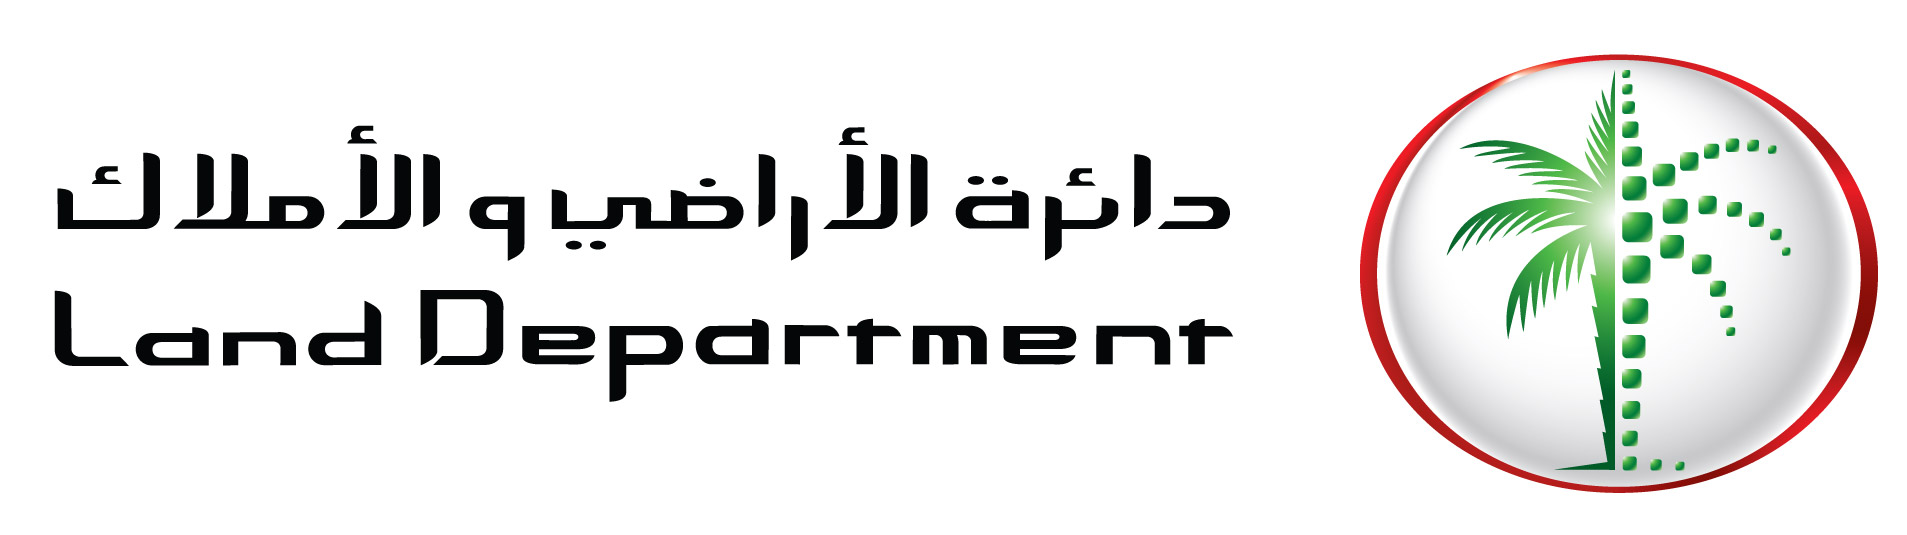 Image result for Dubai Land Department